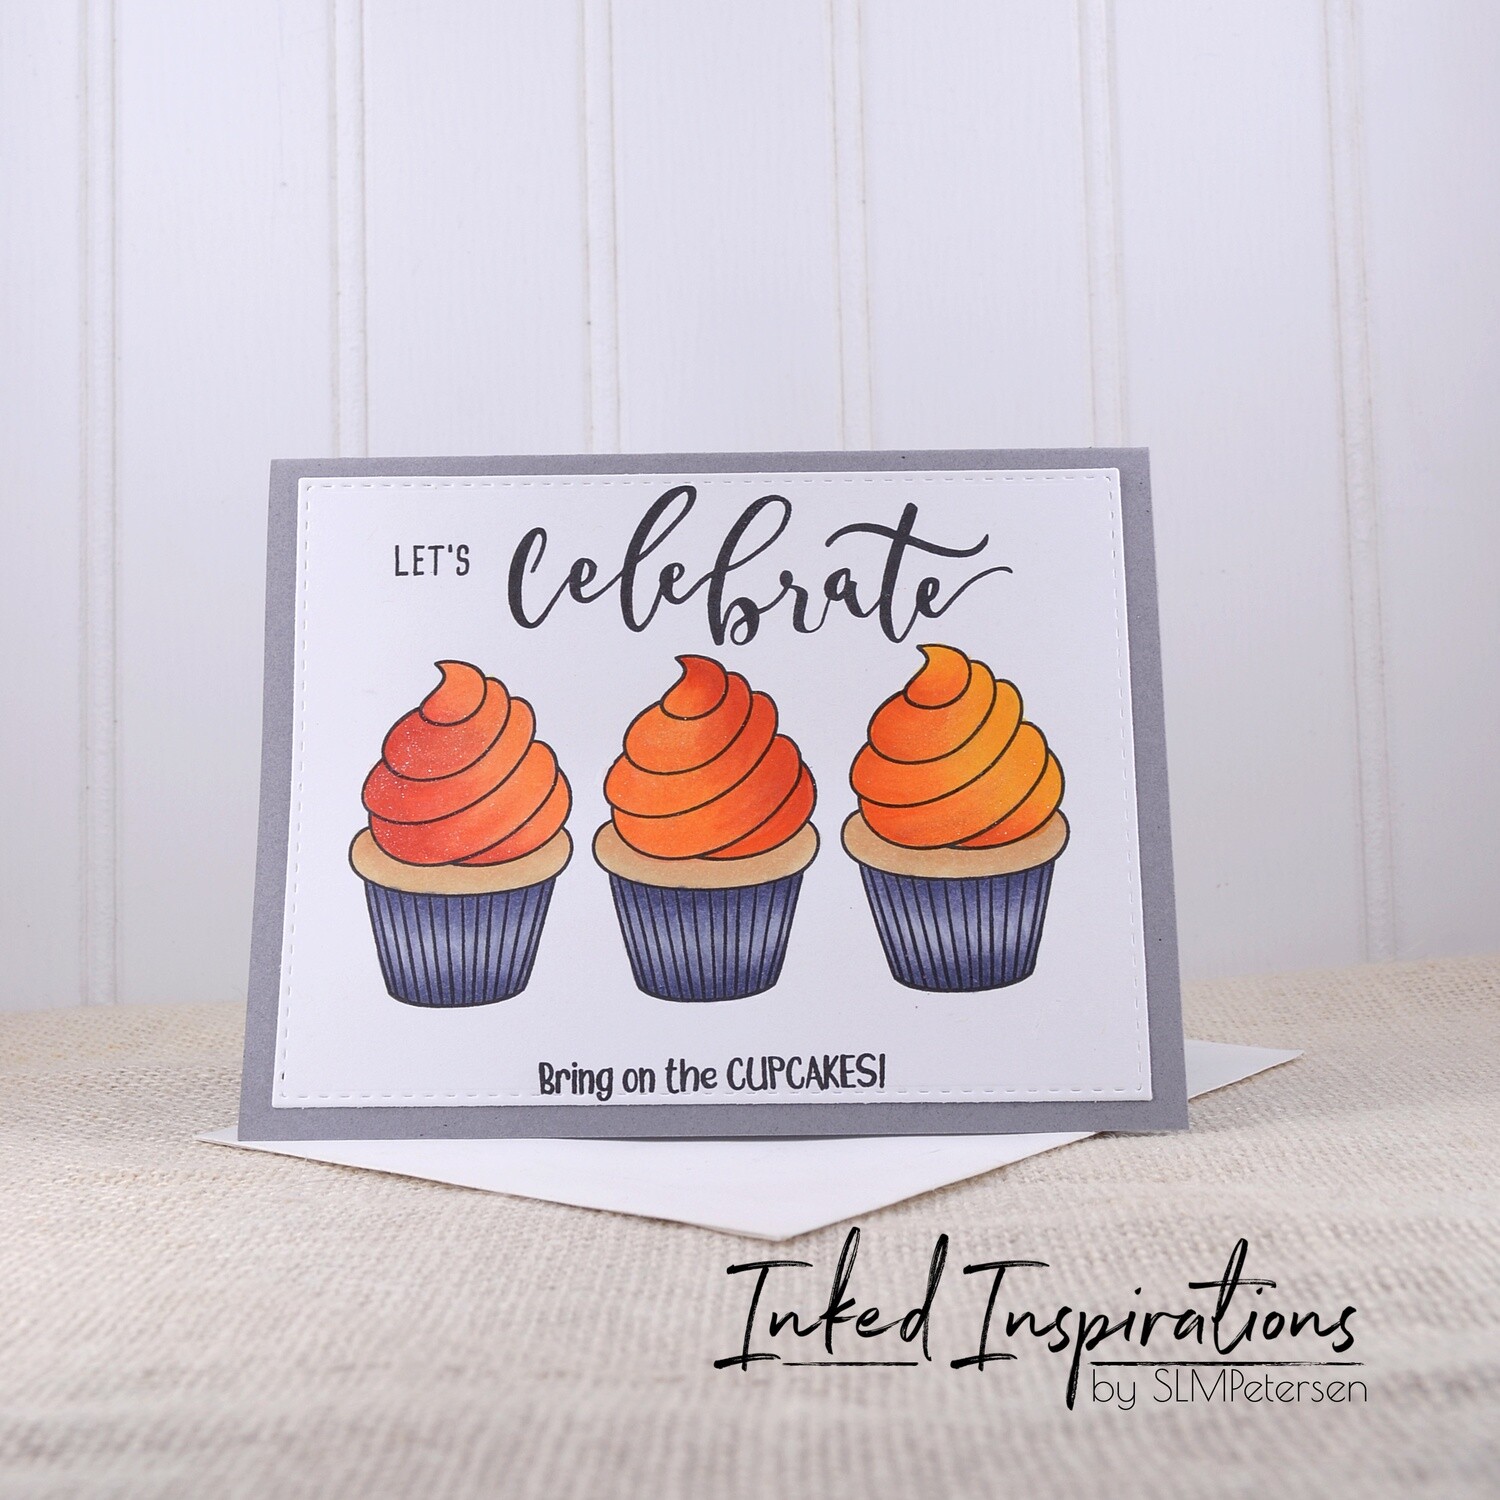 Let's Celebrate Bring on the Cupcakes - Orange Cupcakes